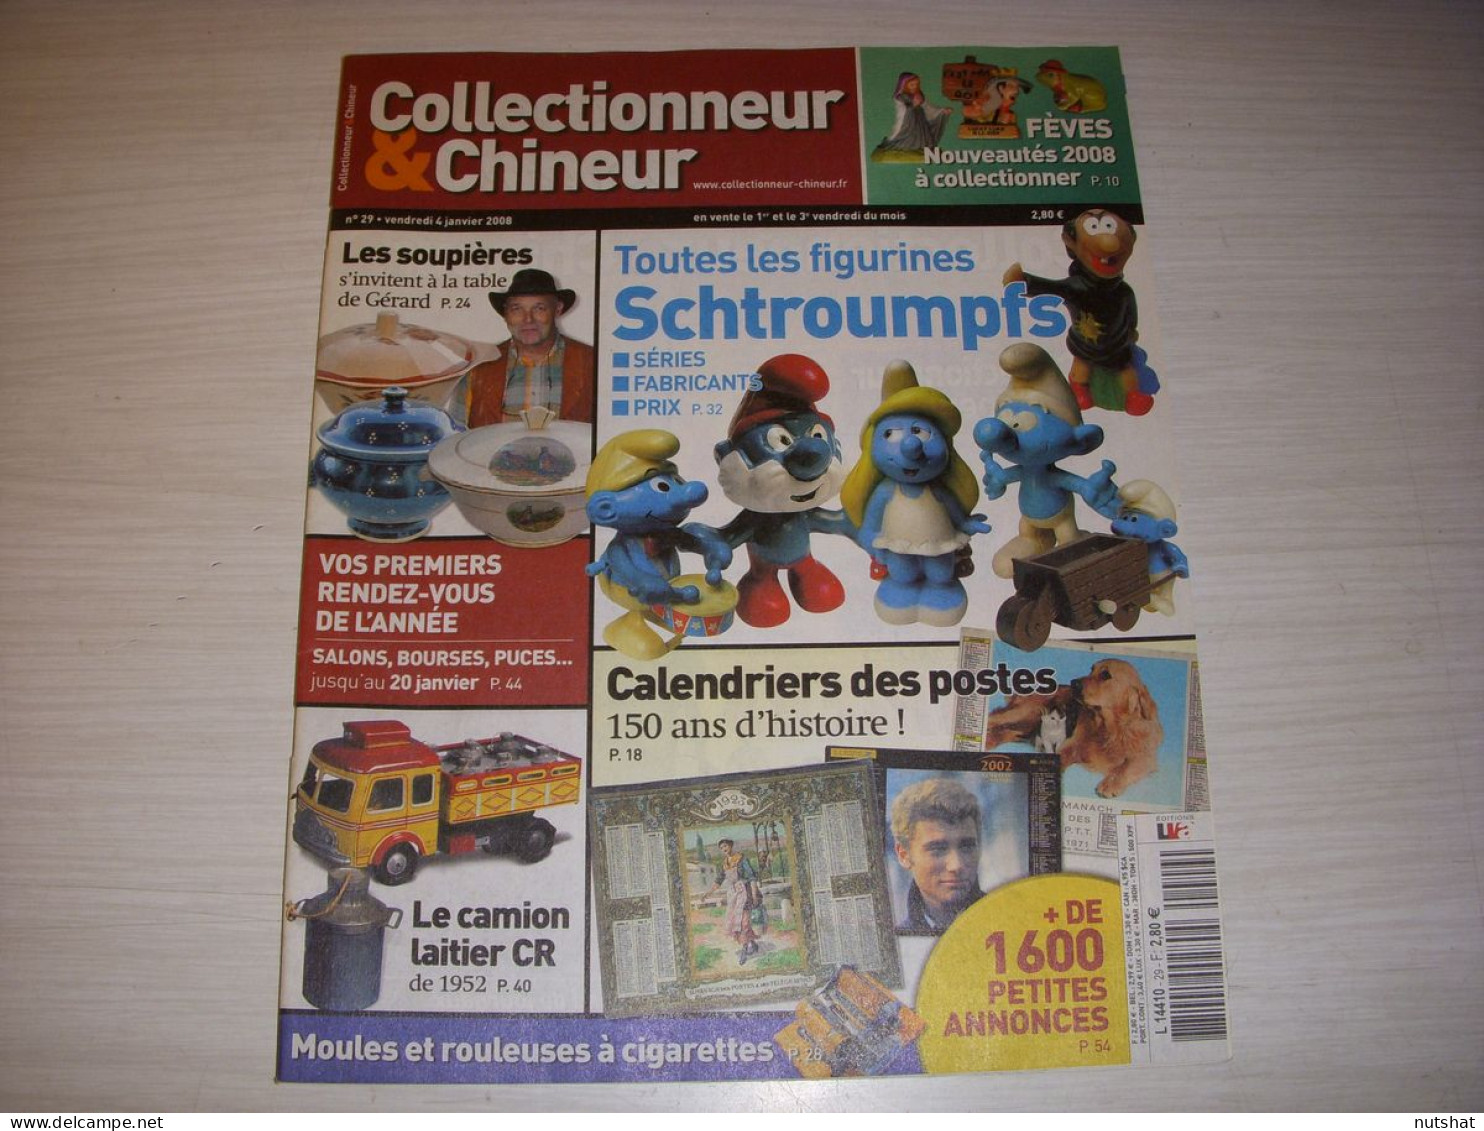 COLLECTIONNEUR CHINEUR 029 04.01.2008 SOUPIERES SCHTROUMPFS CALENDRIER POSTAL - Brocantes & Collections